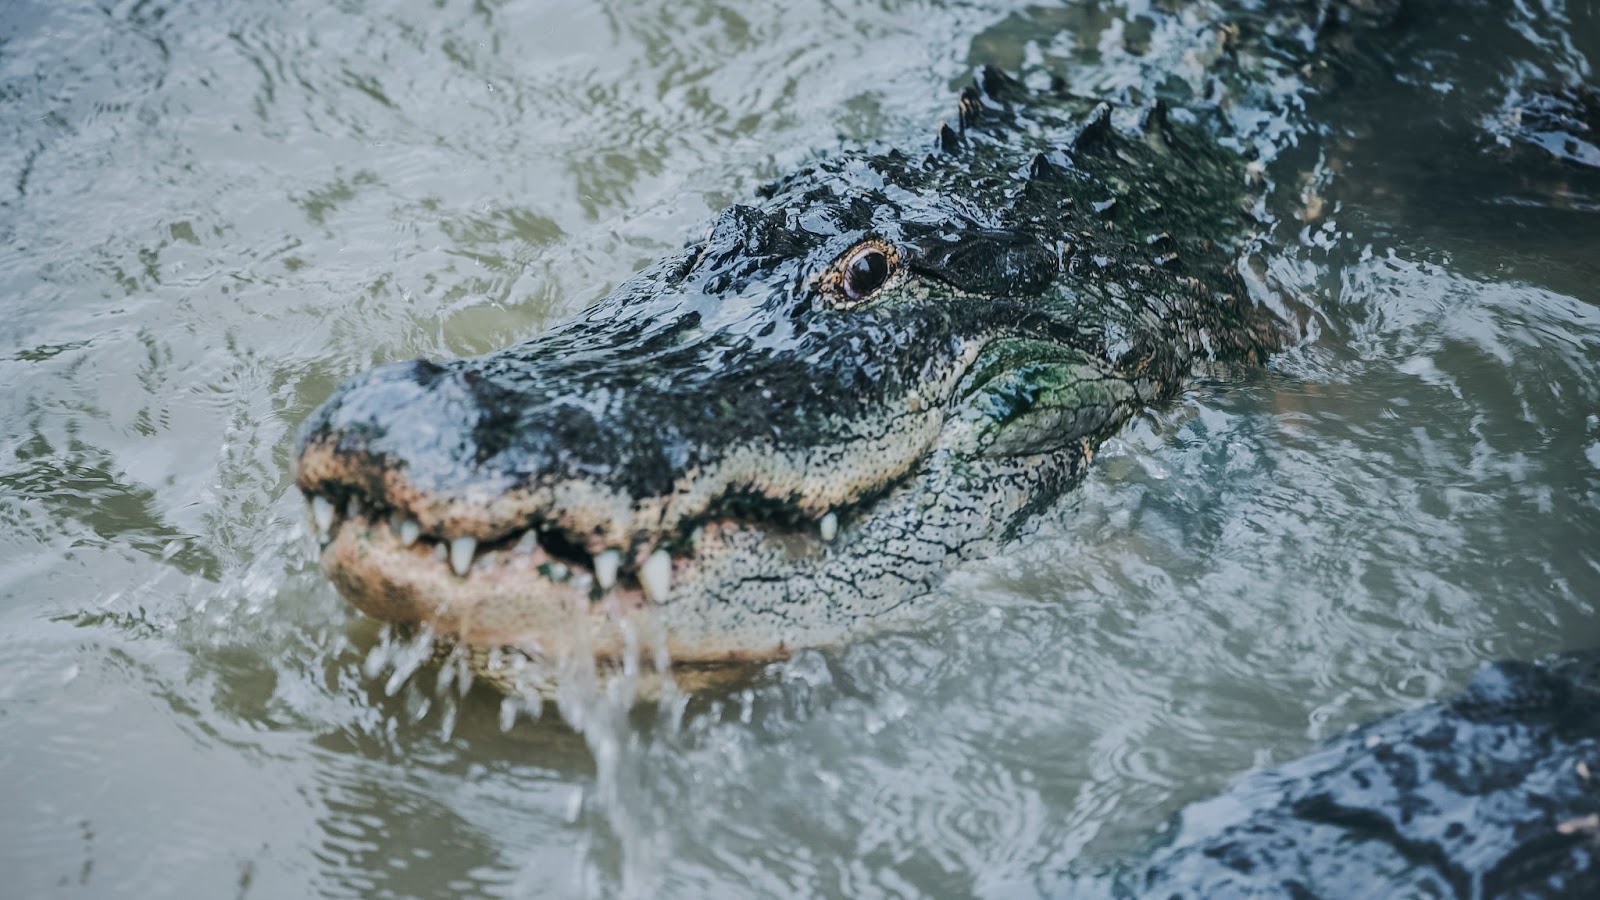 A gator swims through the water at Wild Florida's Gator Park